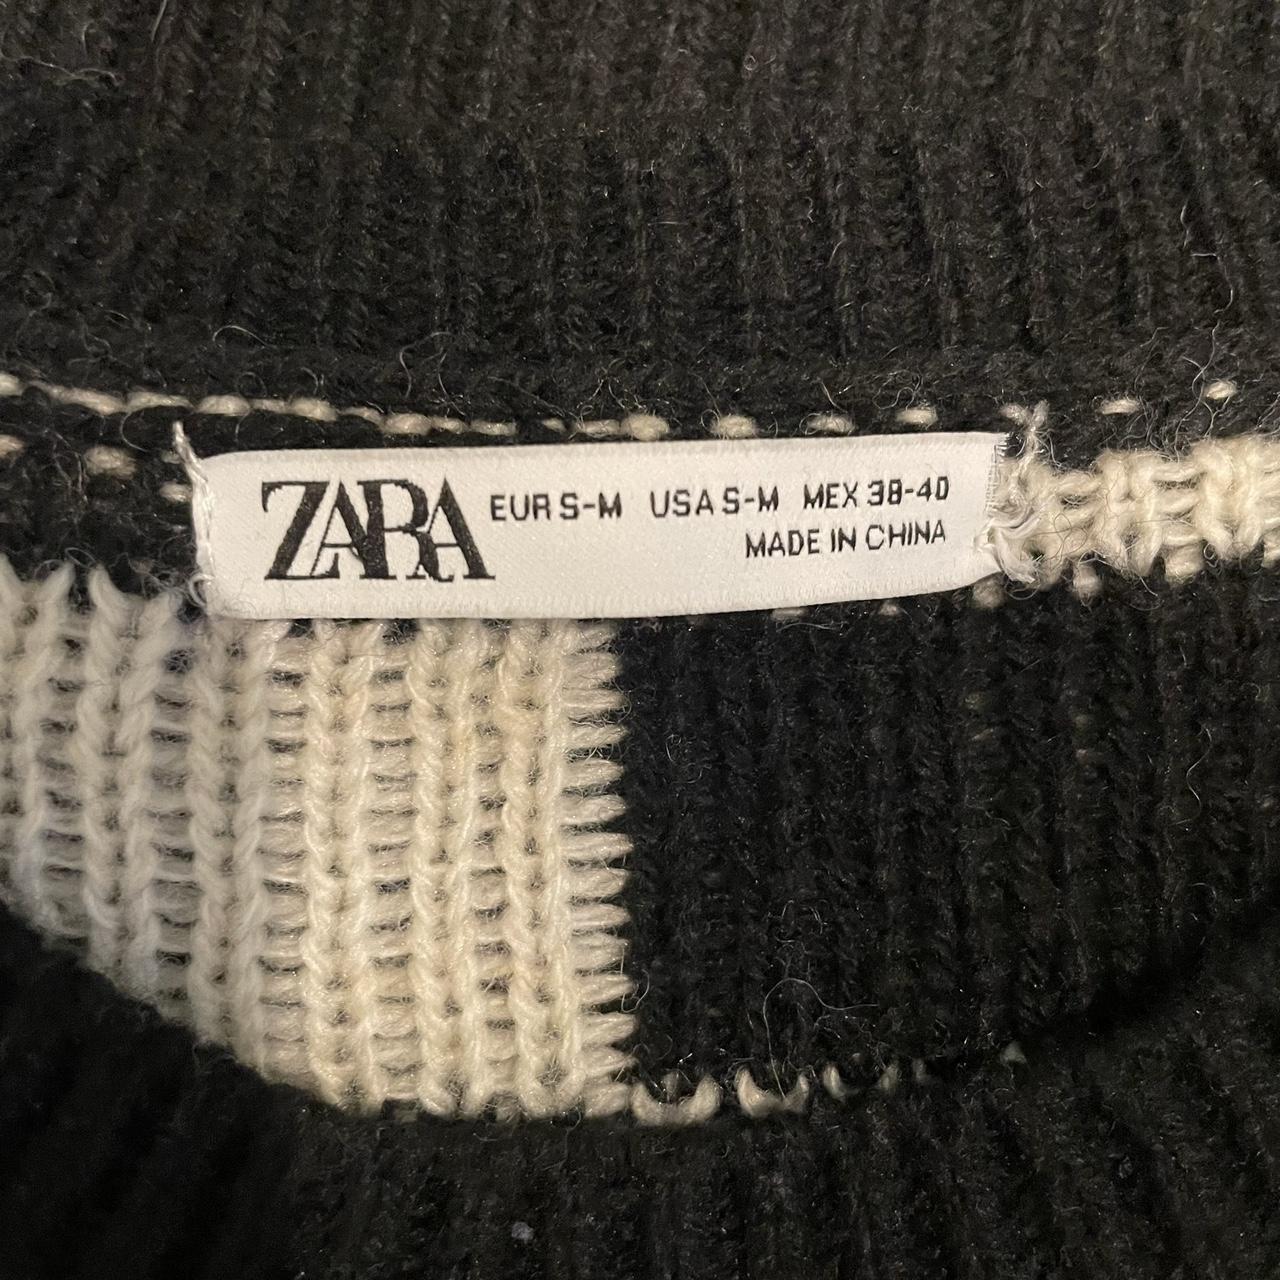 Zara - Black and White Checkered Sweater Vest DEPOP... - Depop